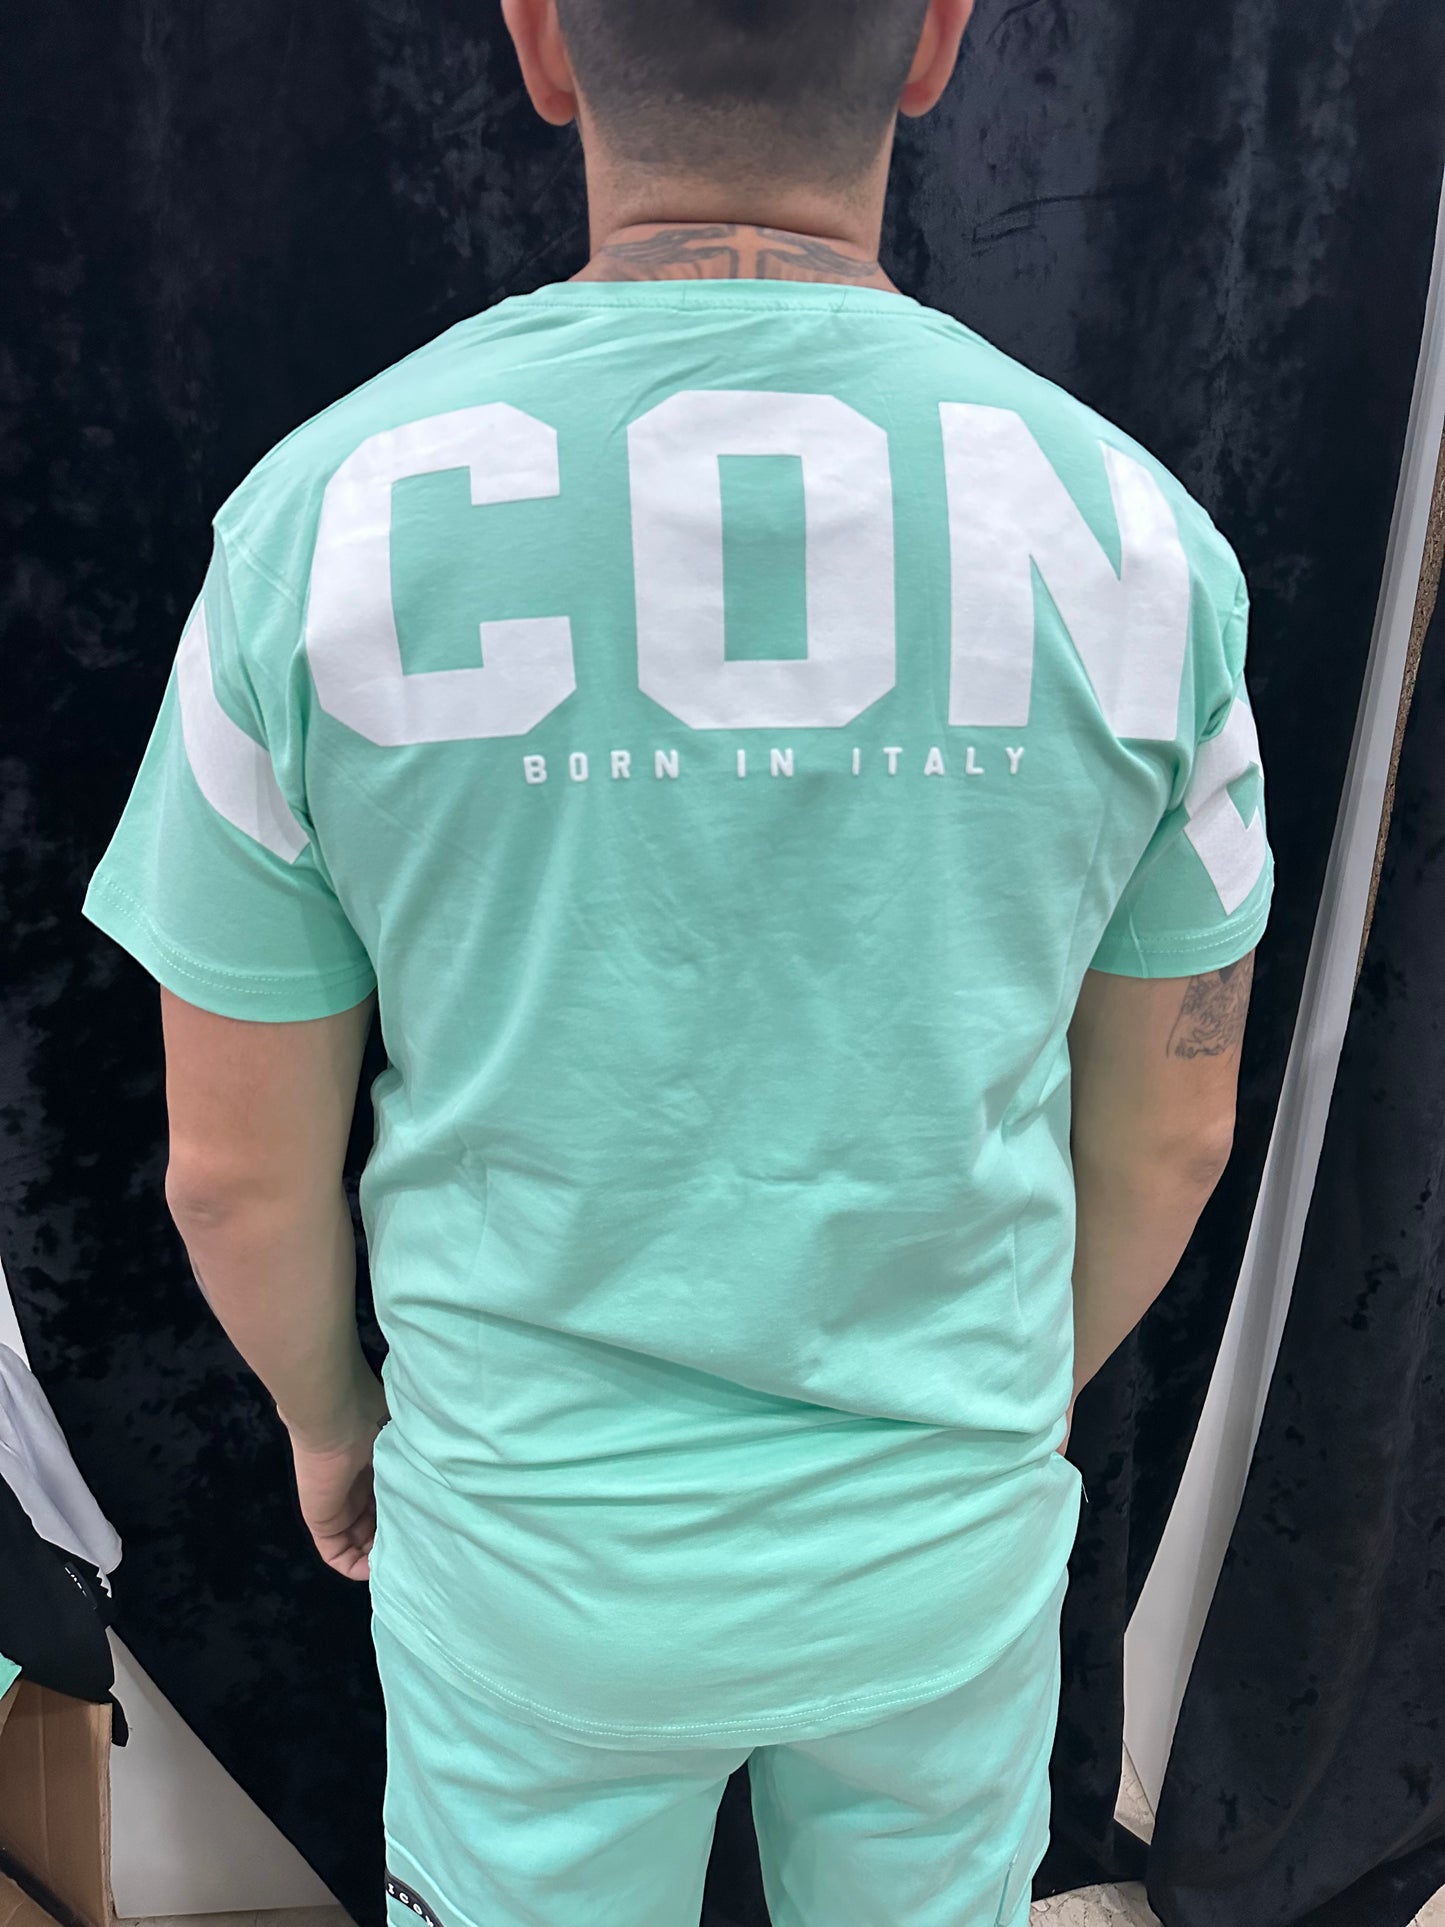 Camiseta espalda ICON2